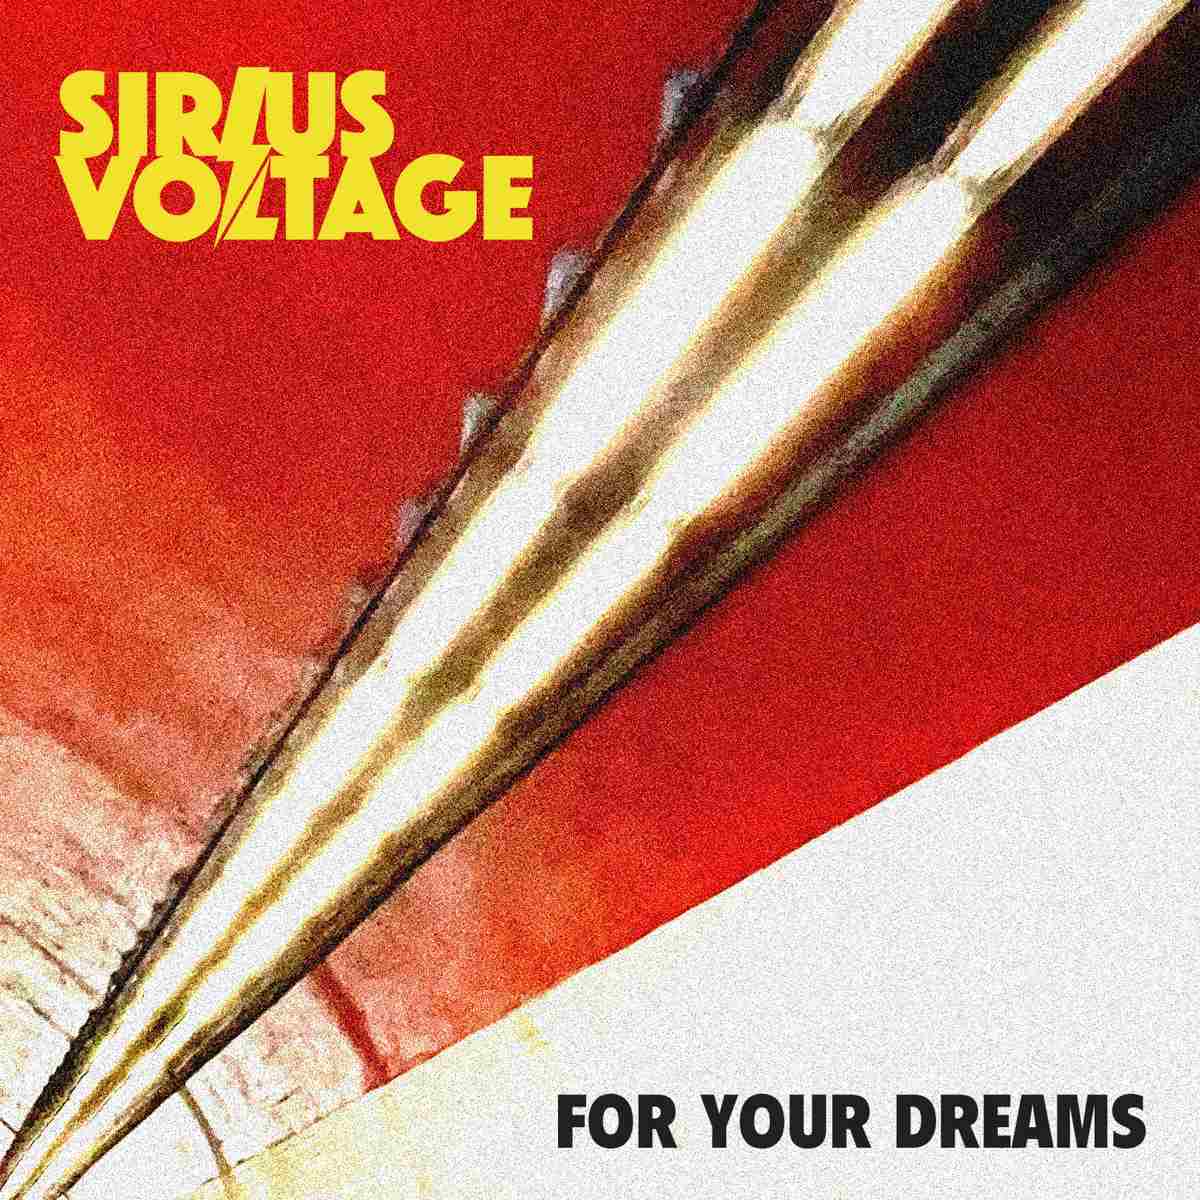 Sirius Voltage for your dreams